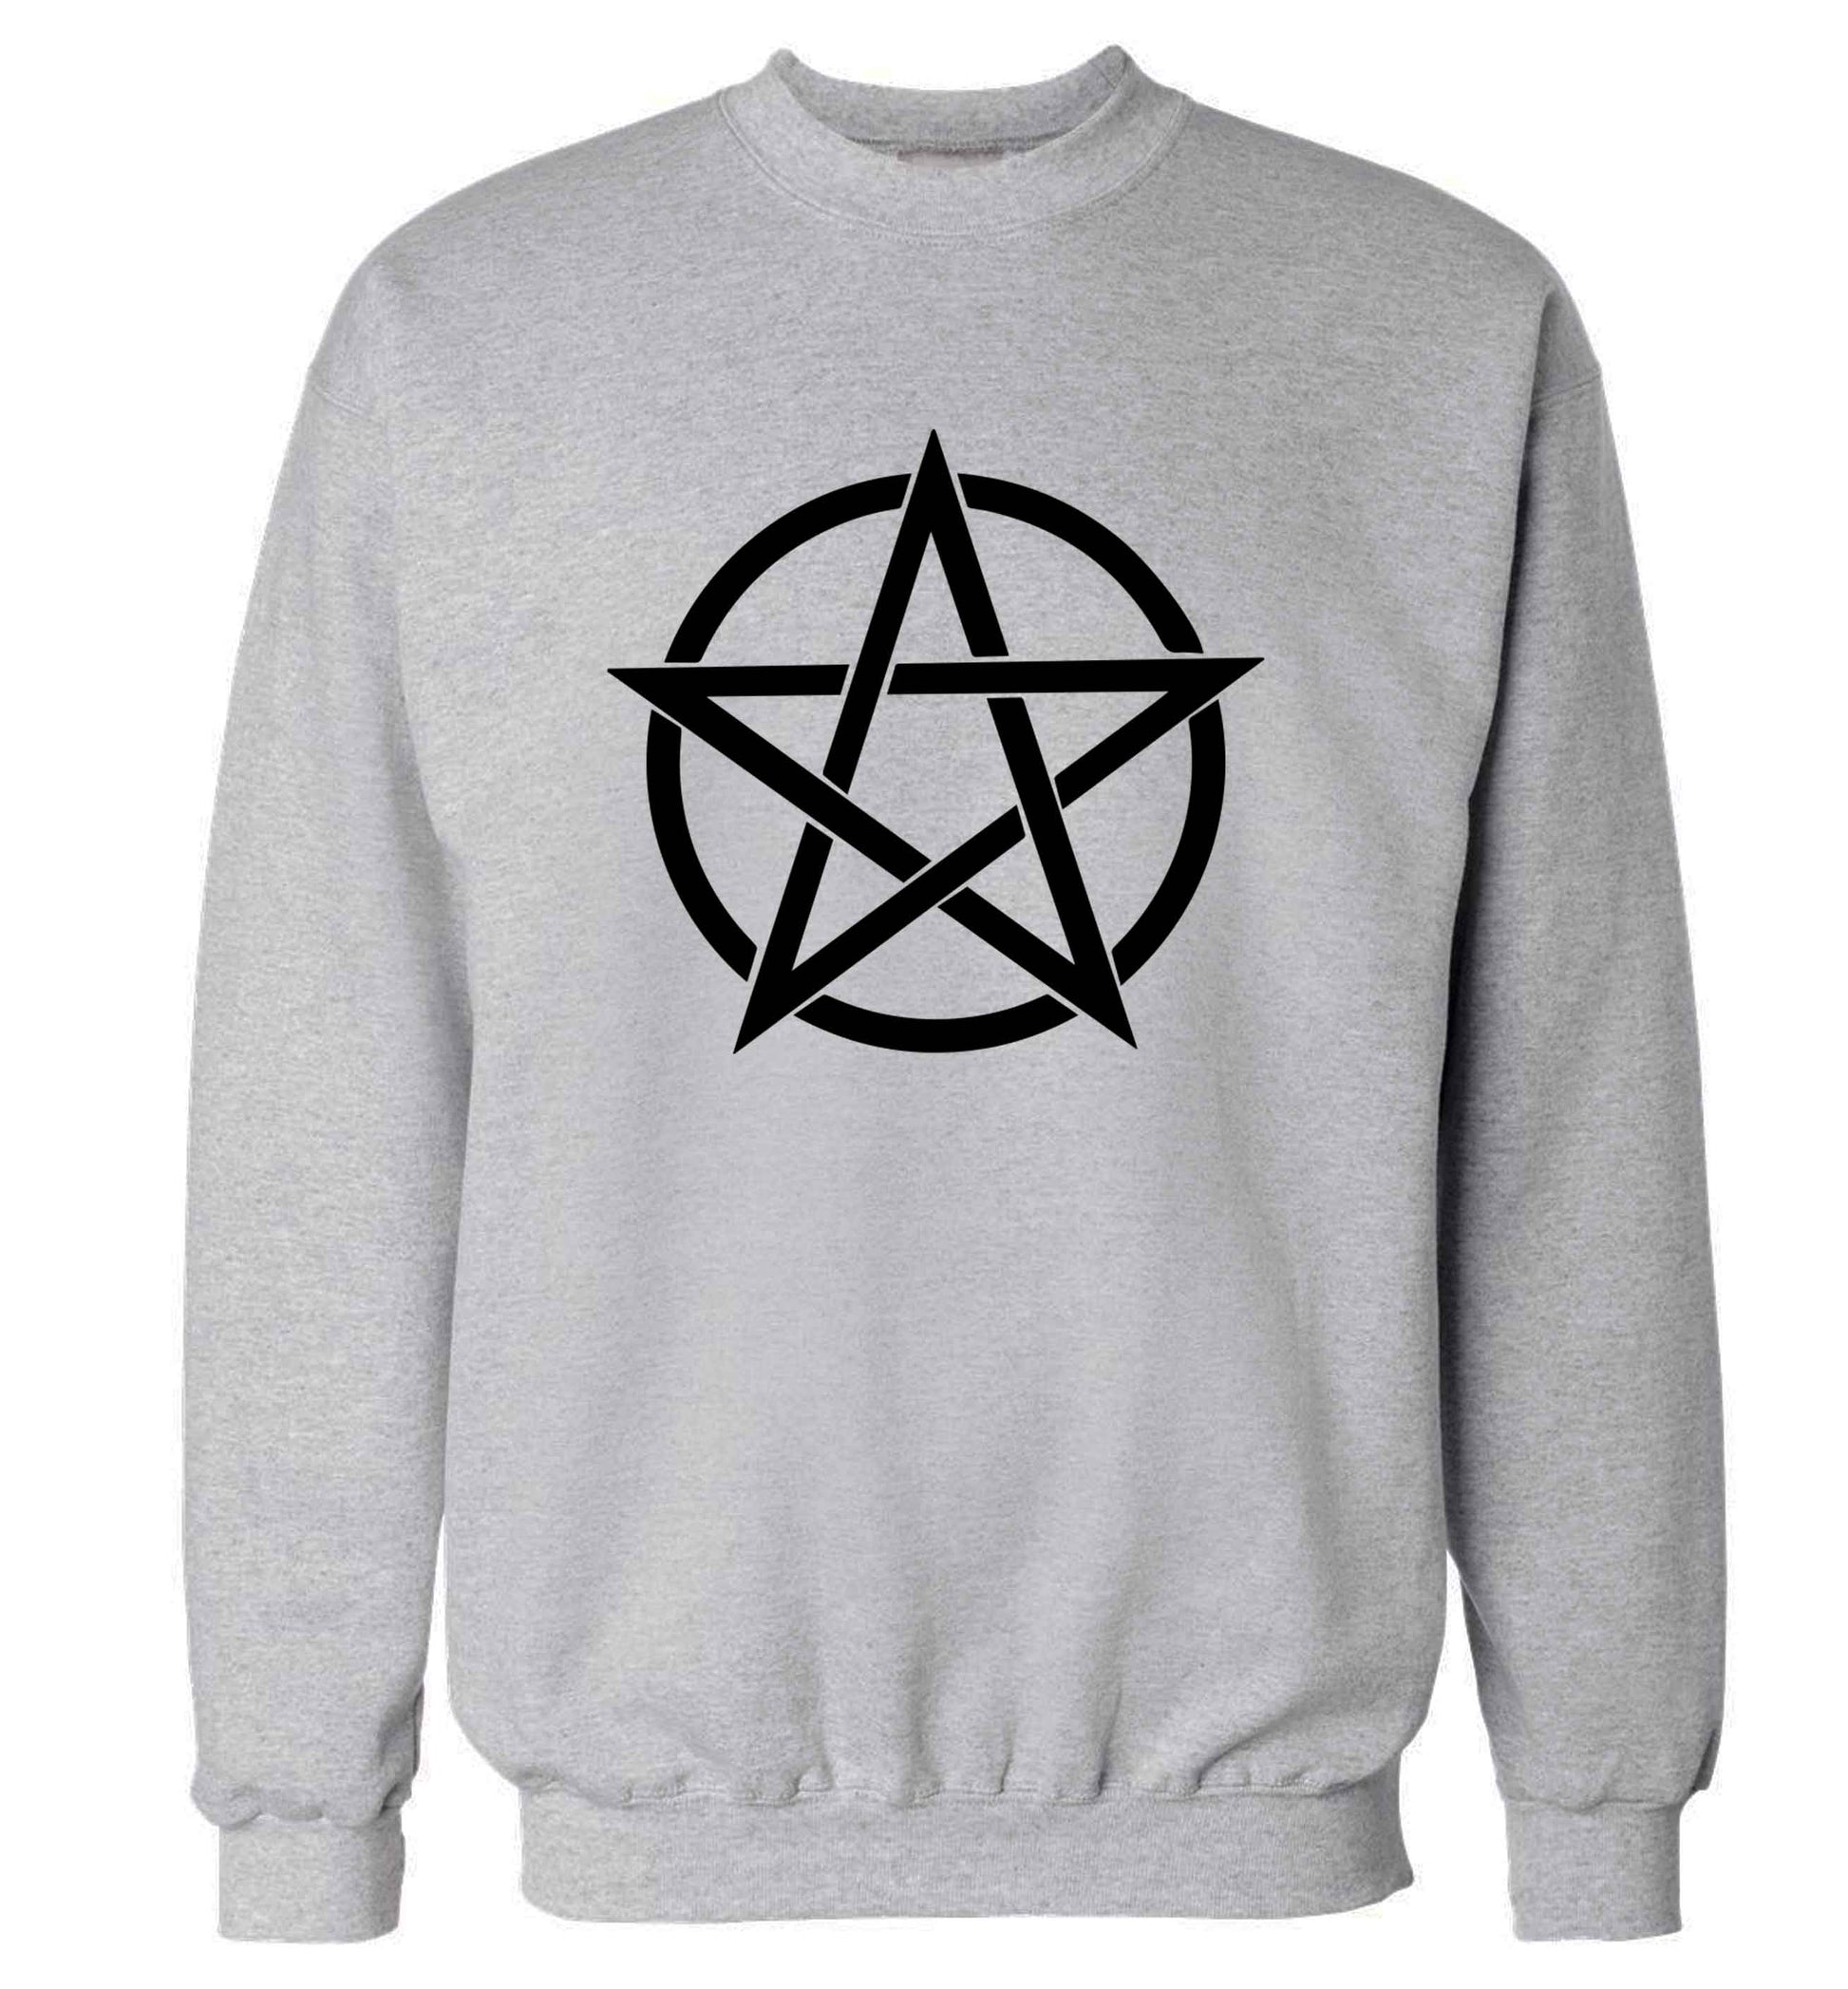 Pentagram symbol adult's unisex grey sweater 2XL